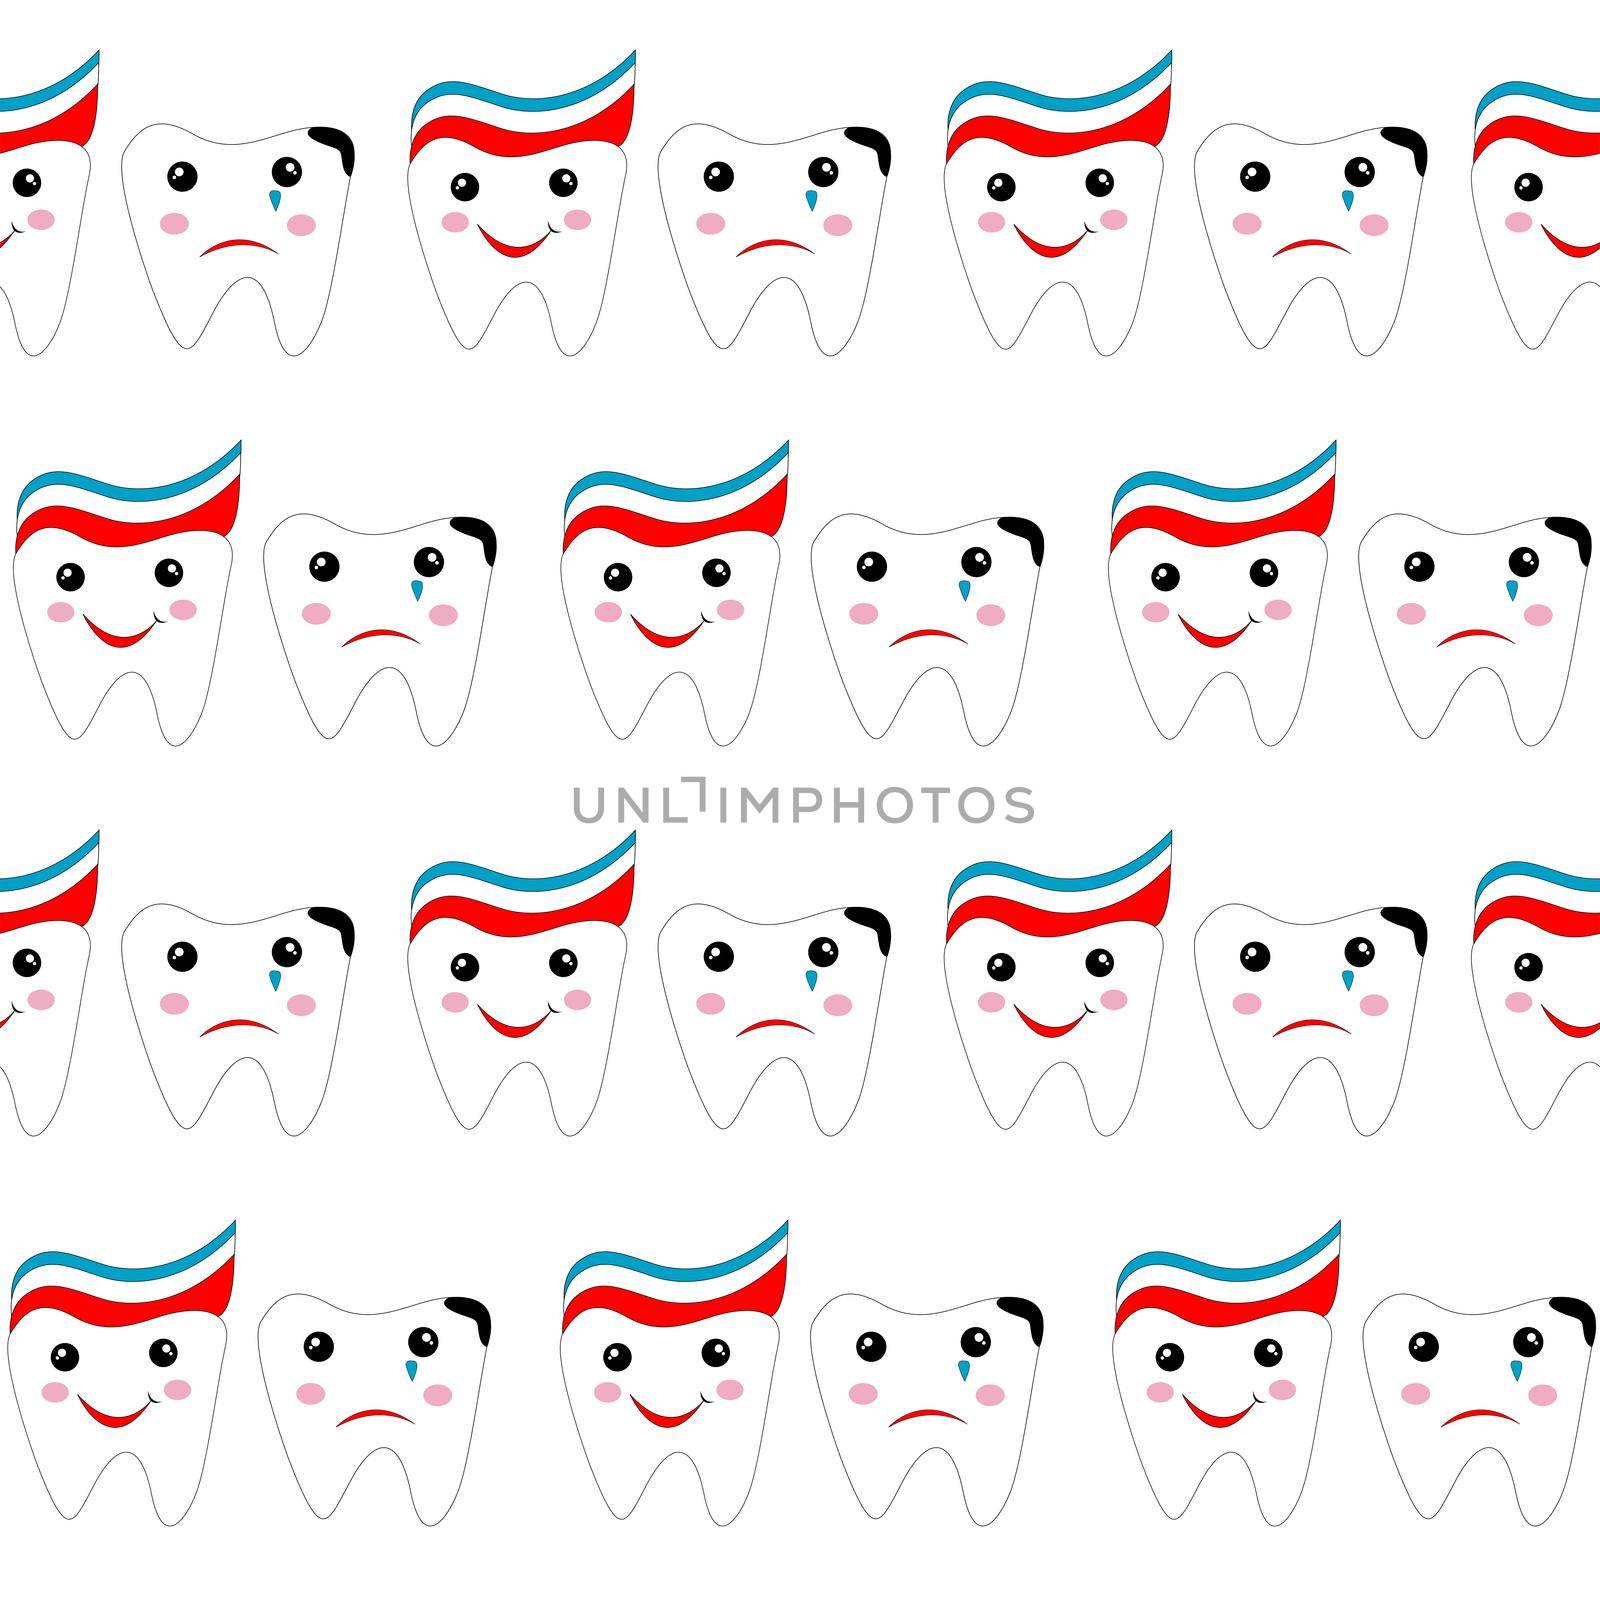 Smiling and upset cartoon teeth seamless pattern by hibrida13